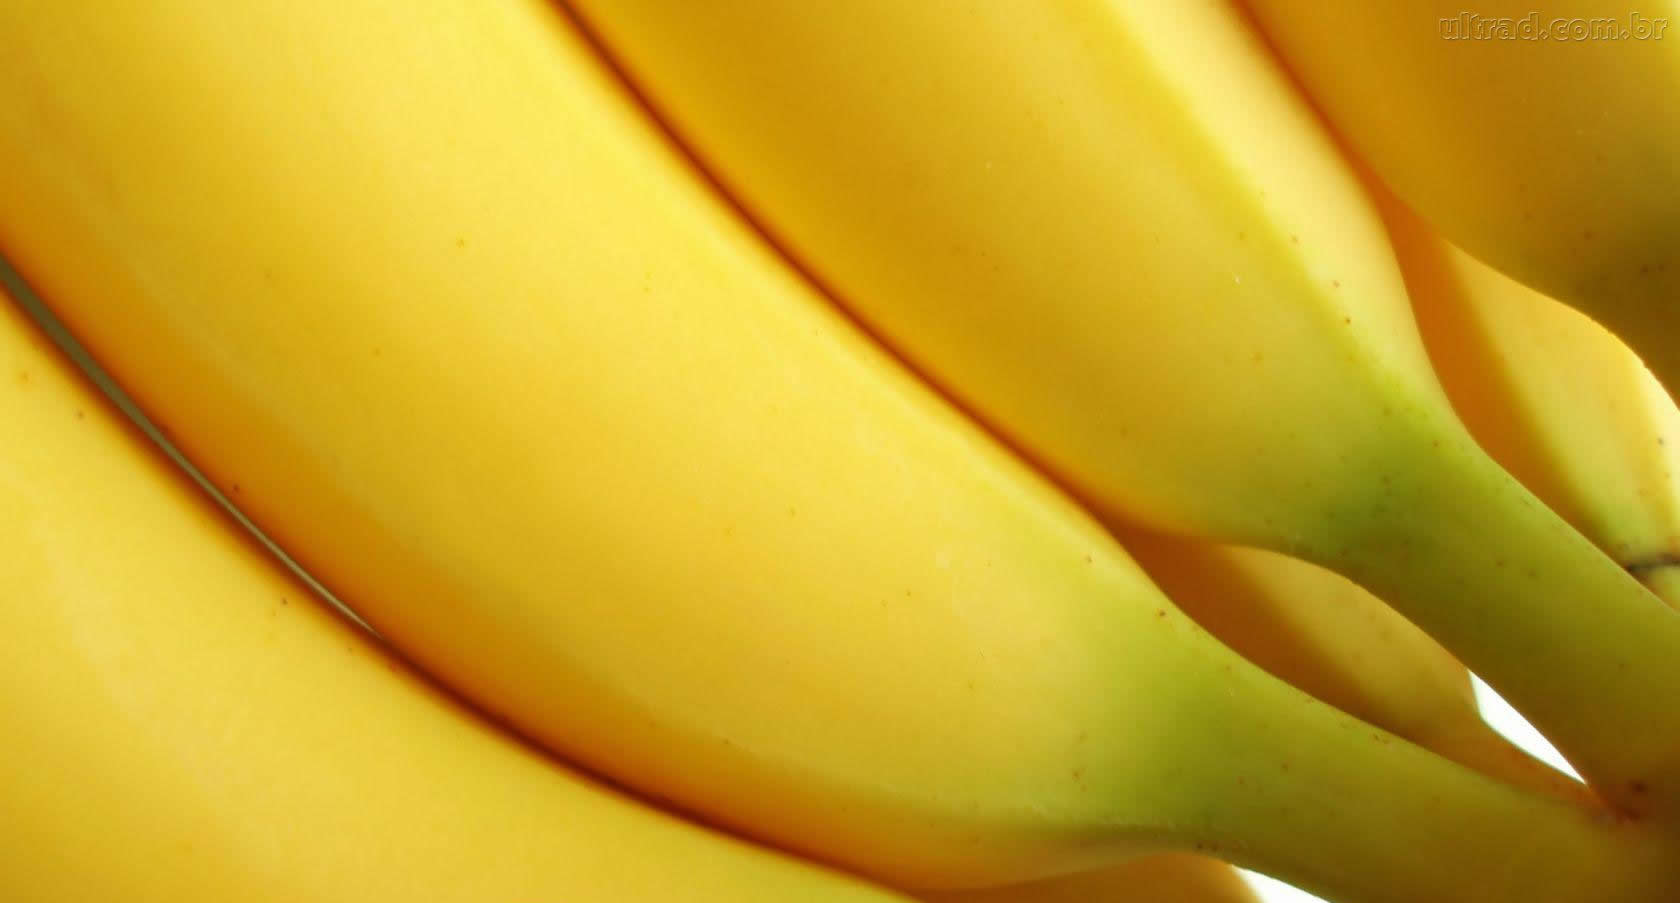 Fruits, Bananas, download photo, banana wallpaper, desktop wallpapers